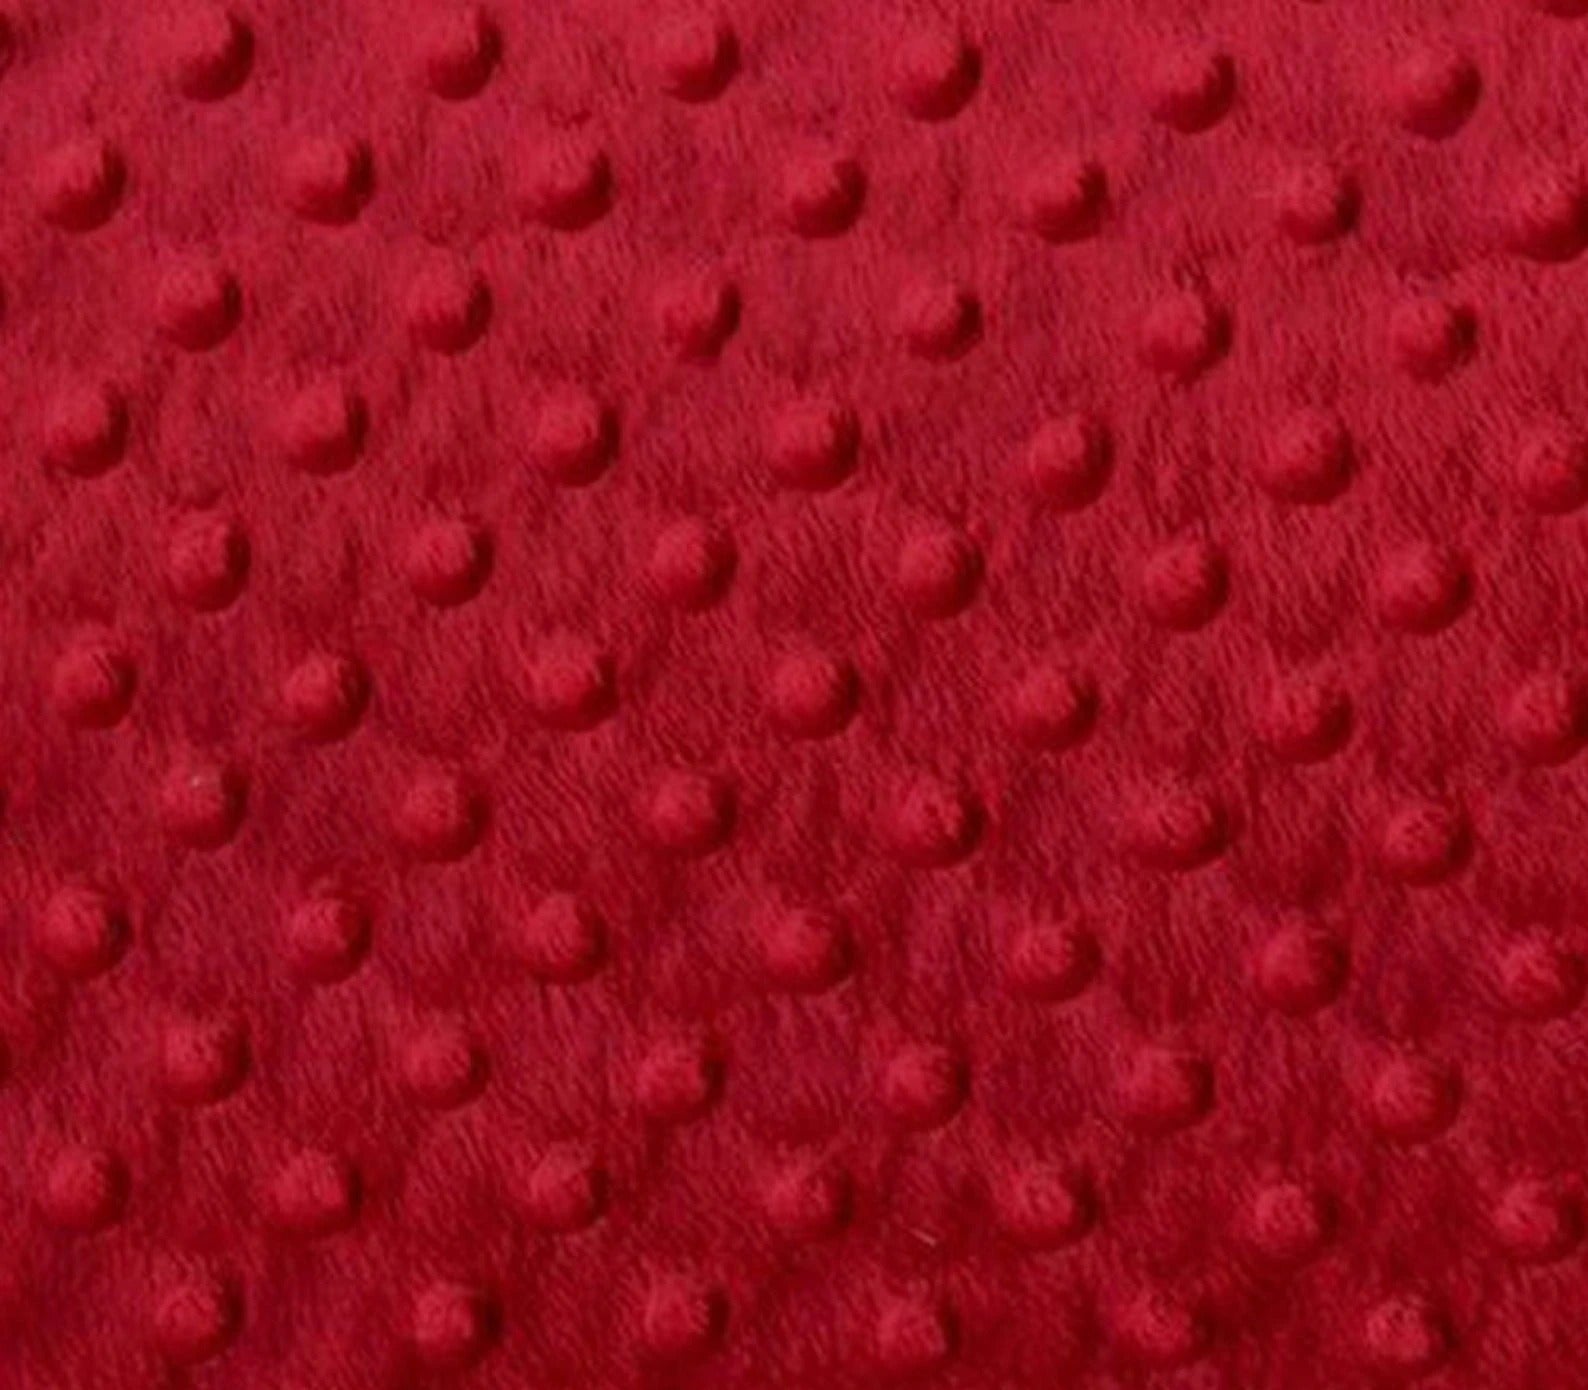 Bubble Polka Dot Minky Fabric By The Roll (20 Yards) Wholesale FabricMinkyICEFABRICICE FABRICSRedBy The Roll (60" Wide)Bubble Polka Dot Minky Fabric By The Roll (20 Yards) Wholesale Fabric ICEFABRIC Red